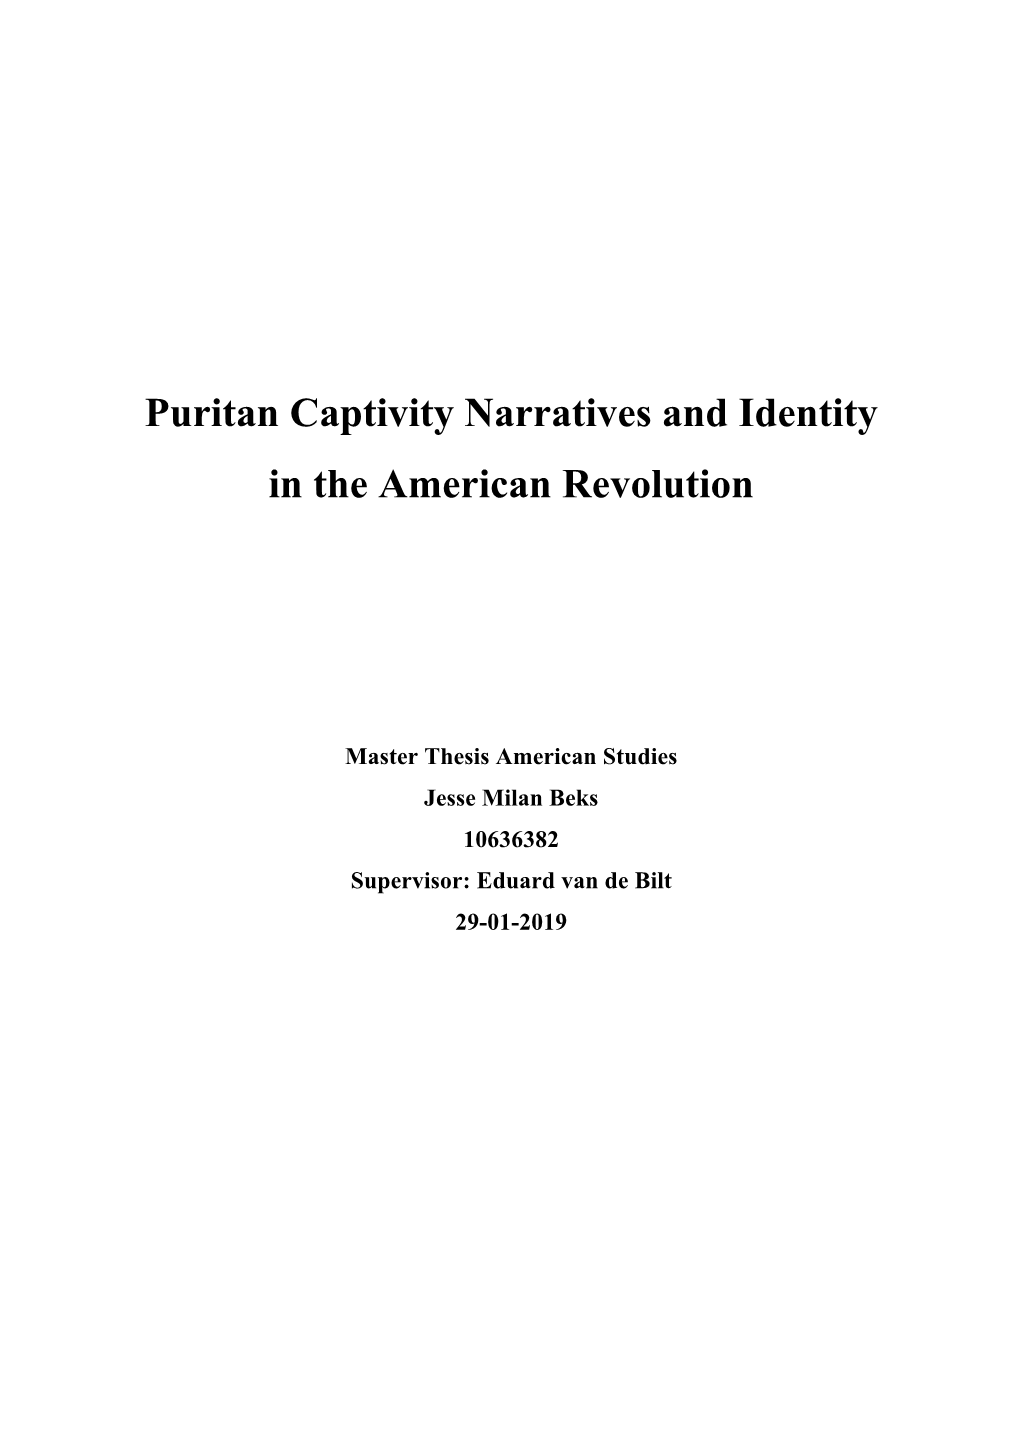 Puritan Captivity Narratives and Identity in the American Revolution